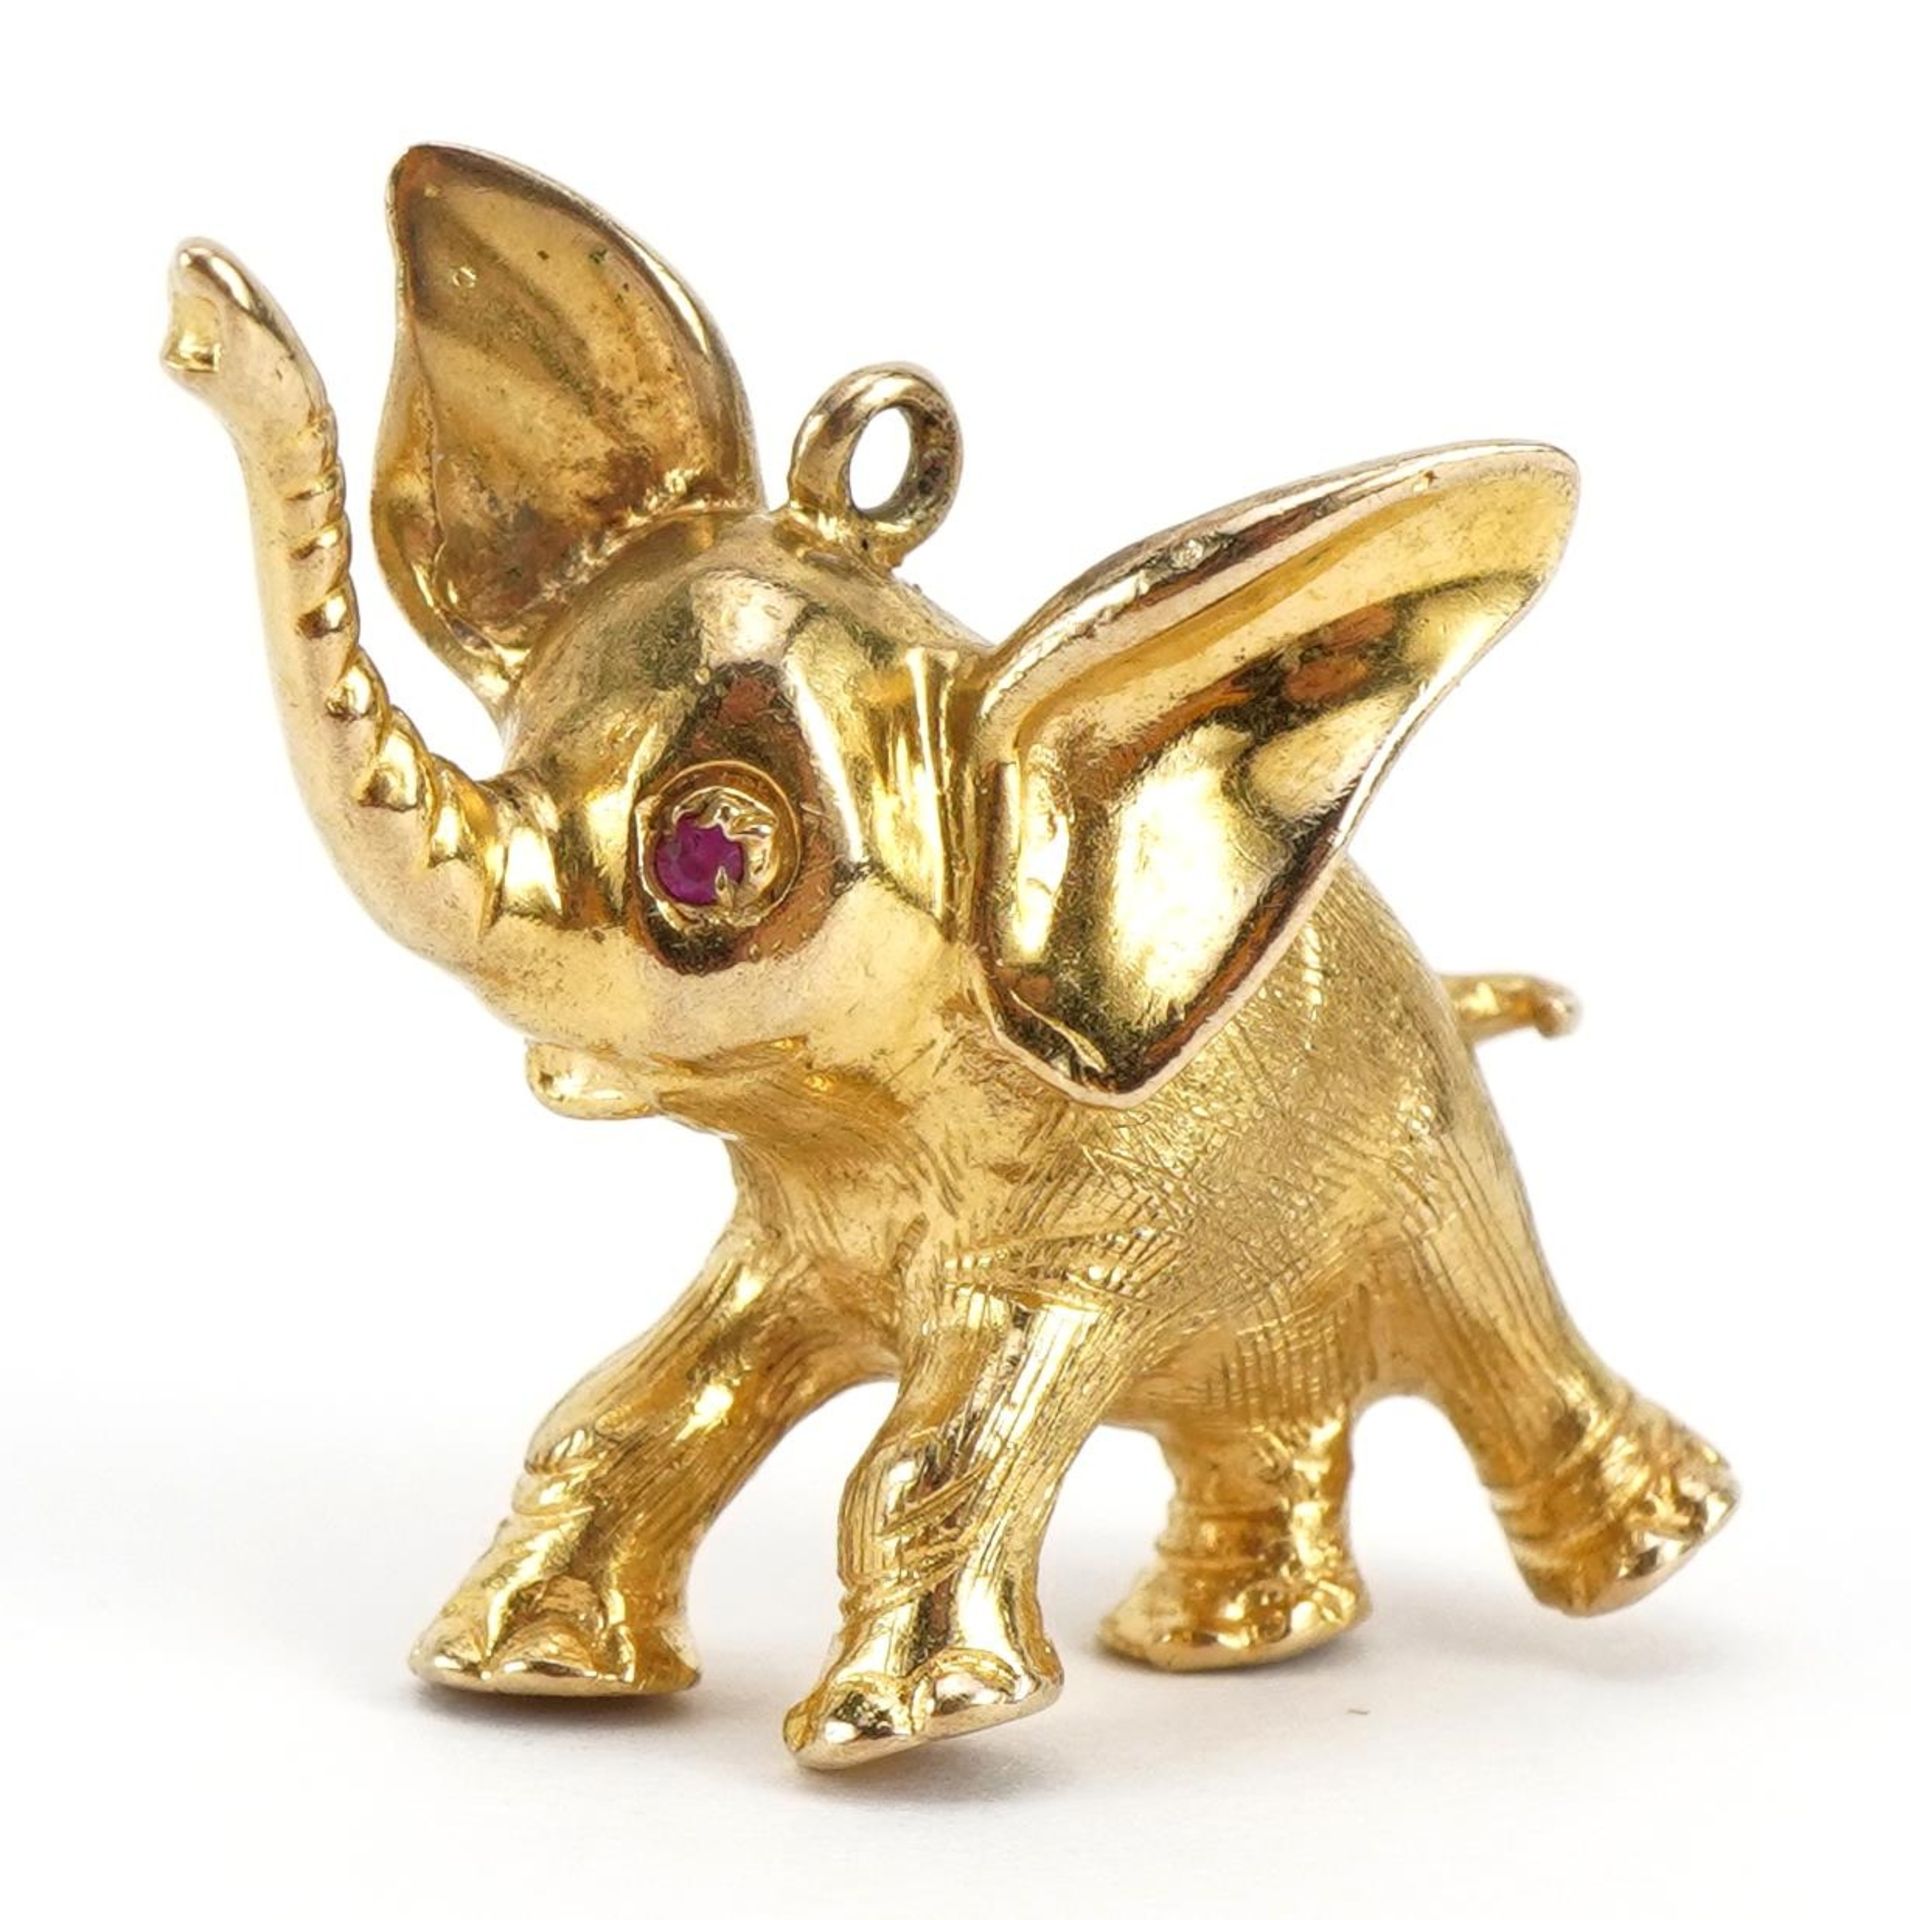 9ct gold elephant pendant with ruby set eye, 2.5cm high, 7.6g